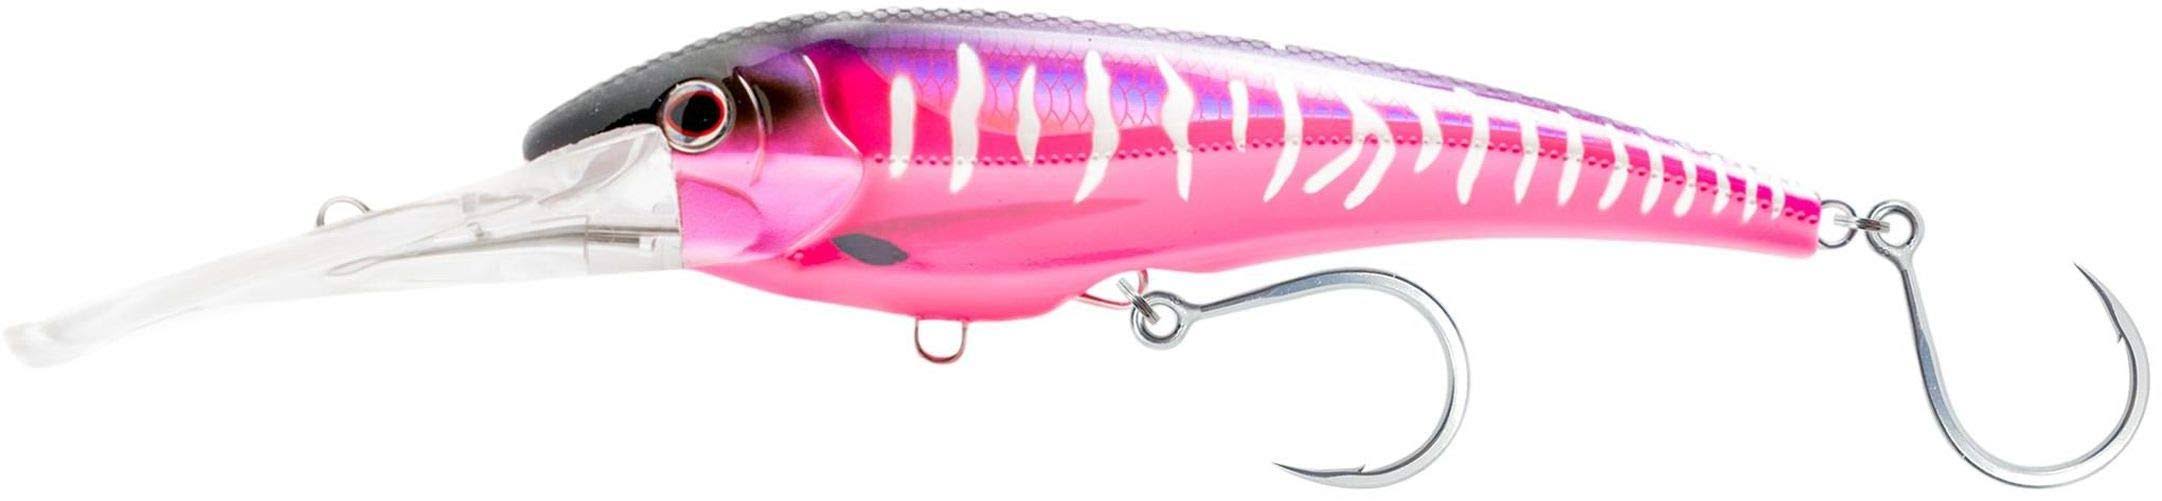 Nomad Design DTX Minnow - Hot Pink Mackerel